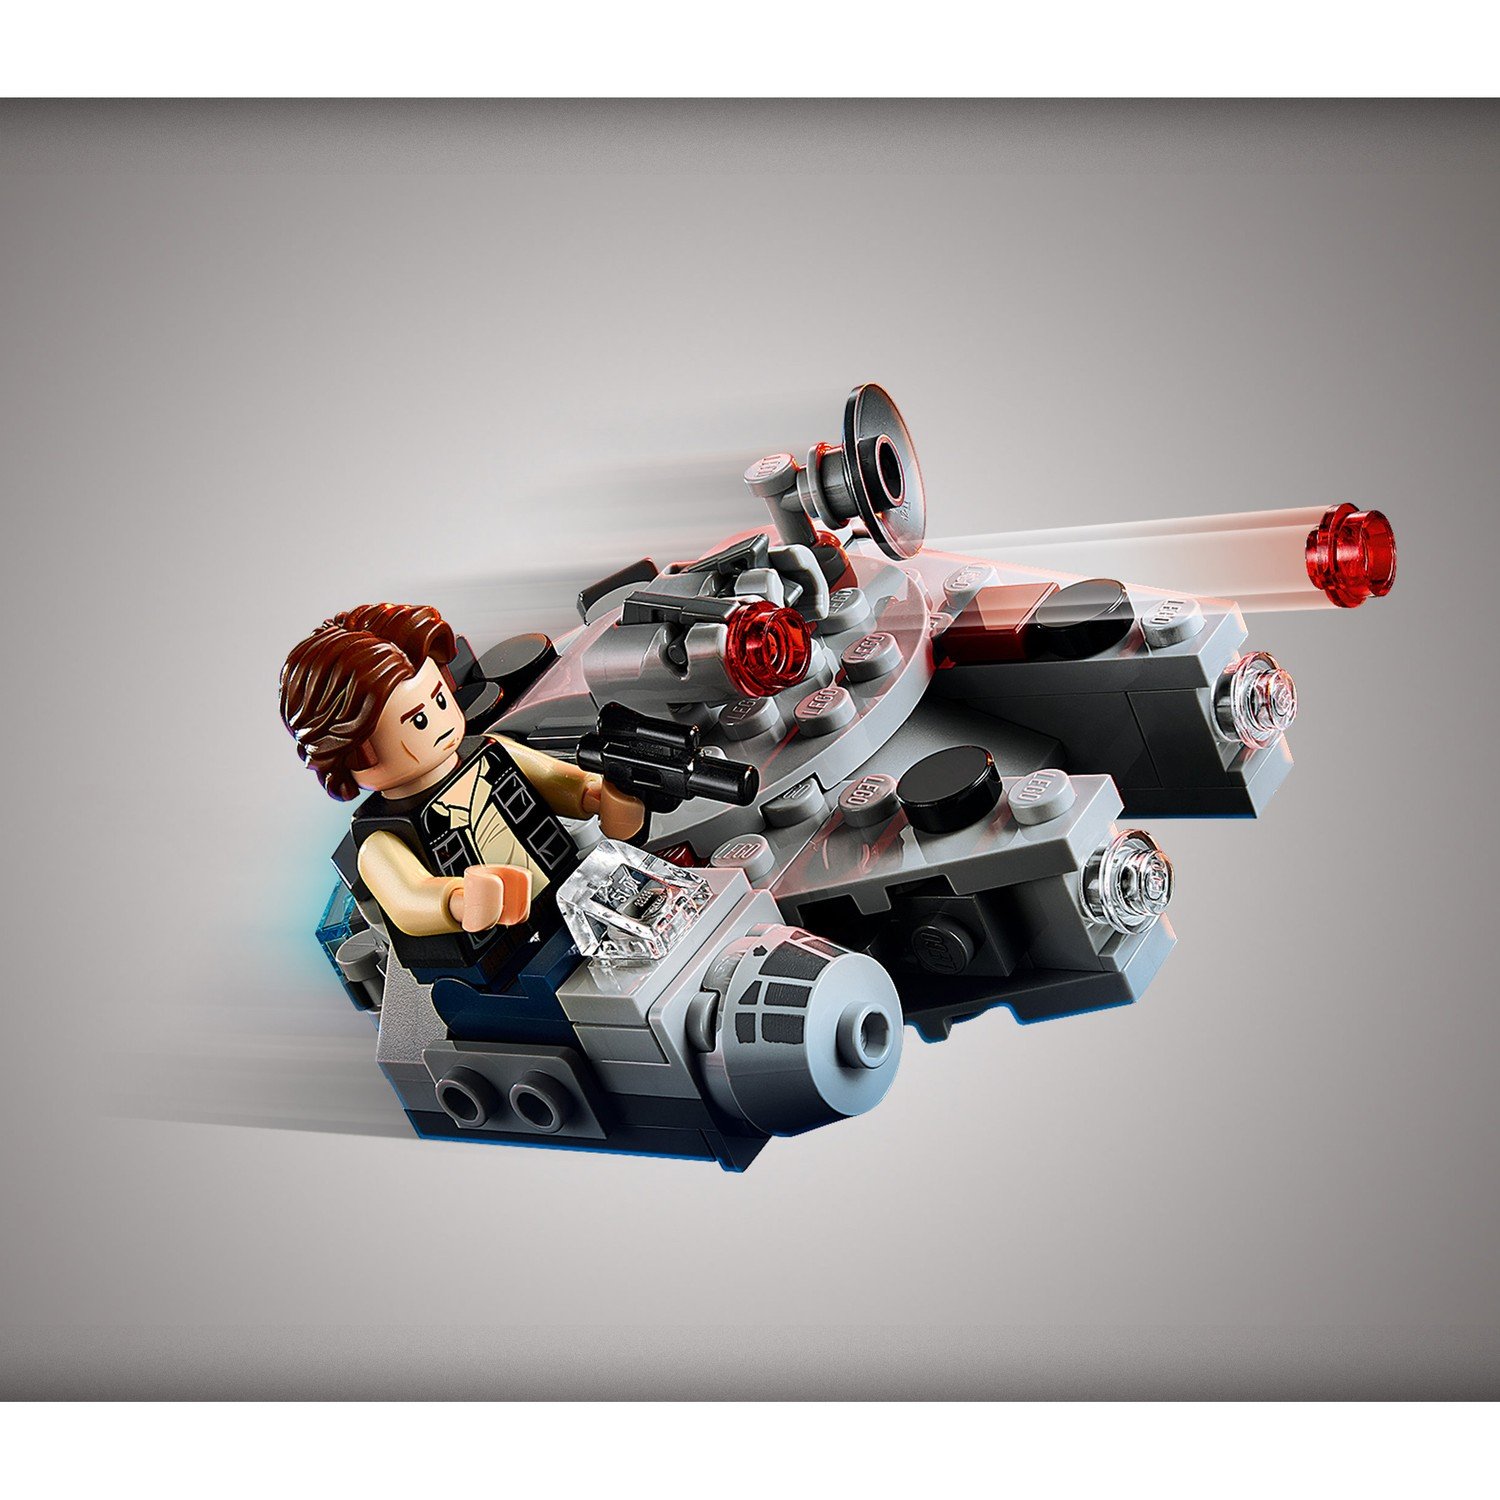 Конструктор LEGO Star Wars 75298 Микрофайтеры: AT-AT против таунтауна